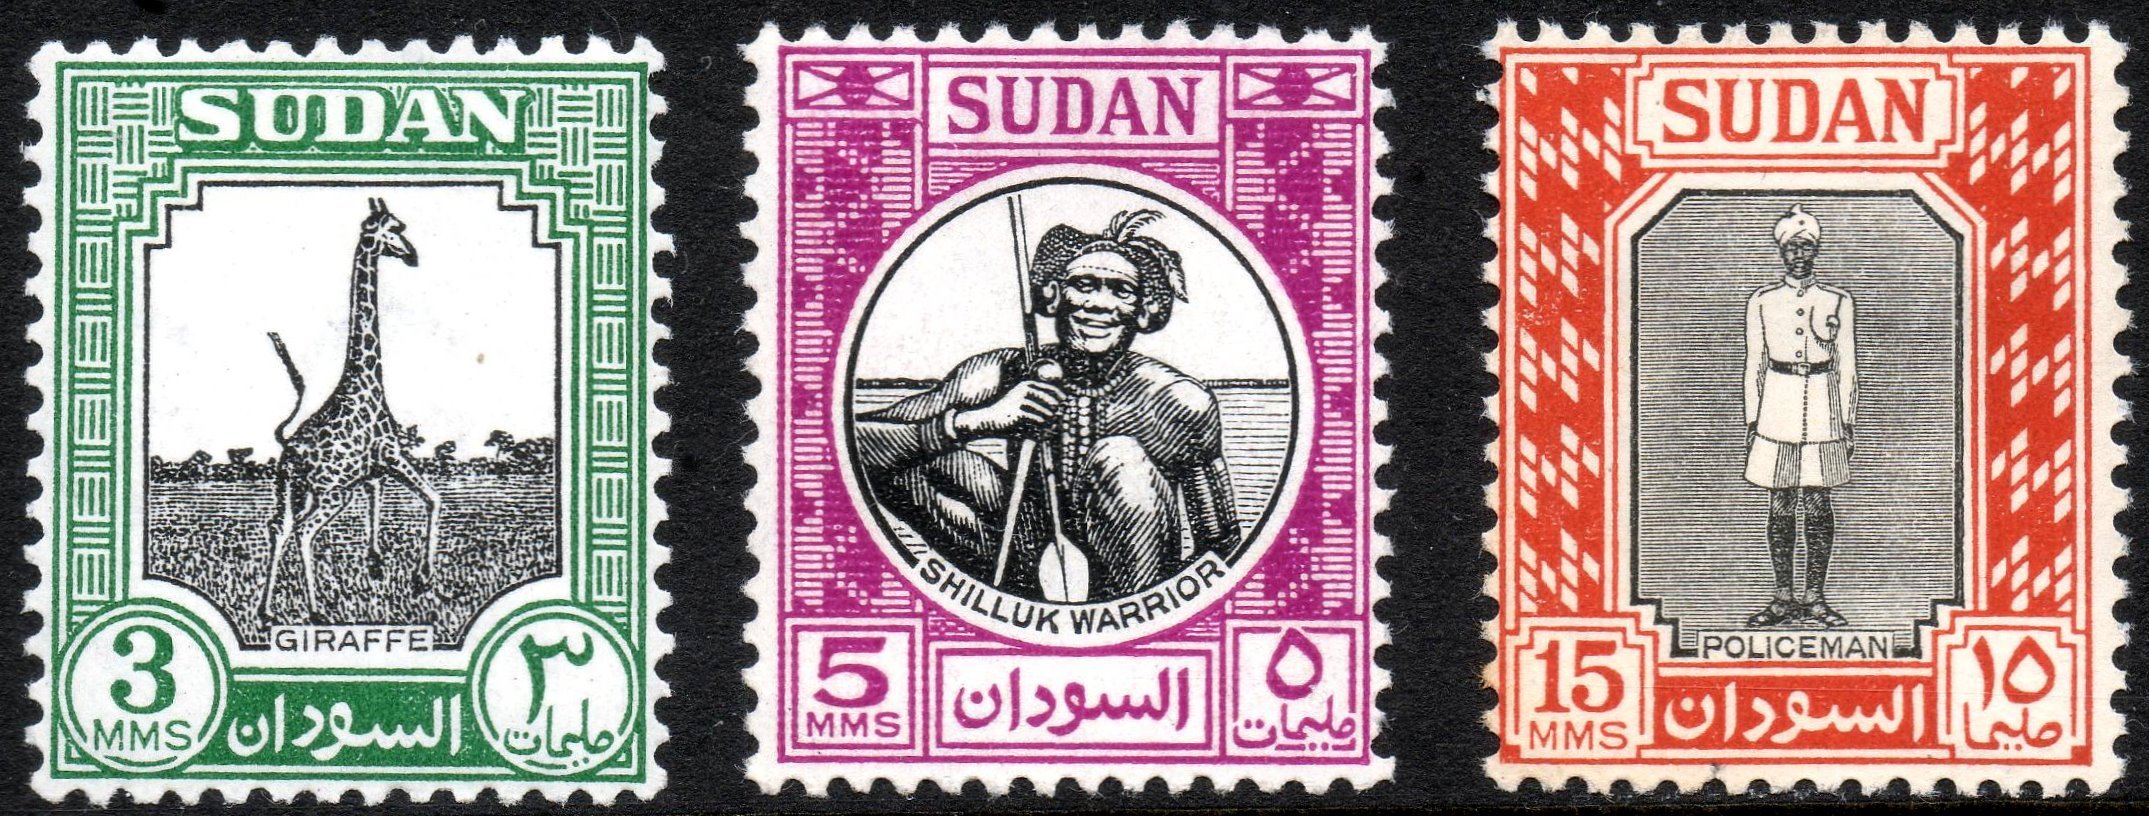 1951 stamps of Sudan